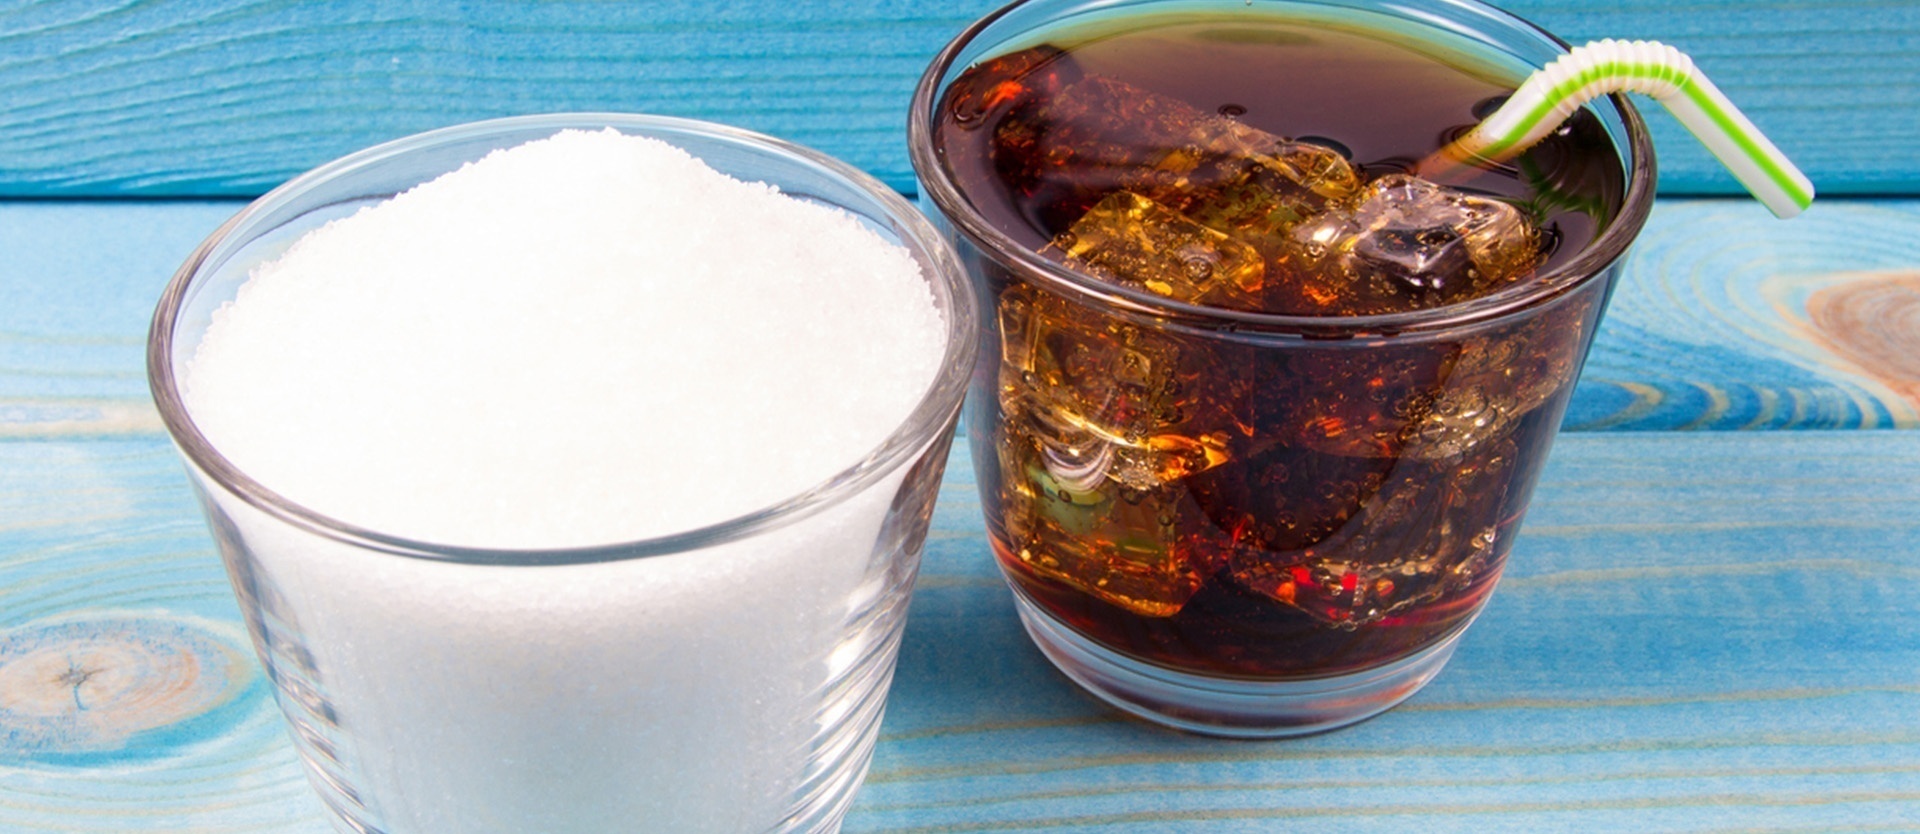 Do Sugar Sweetened Drinks Accelerate Hair Loss?